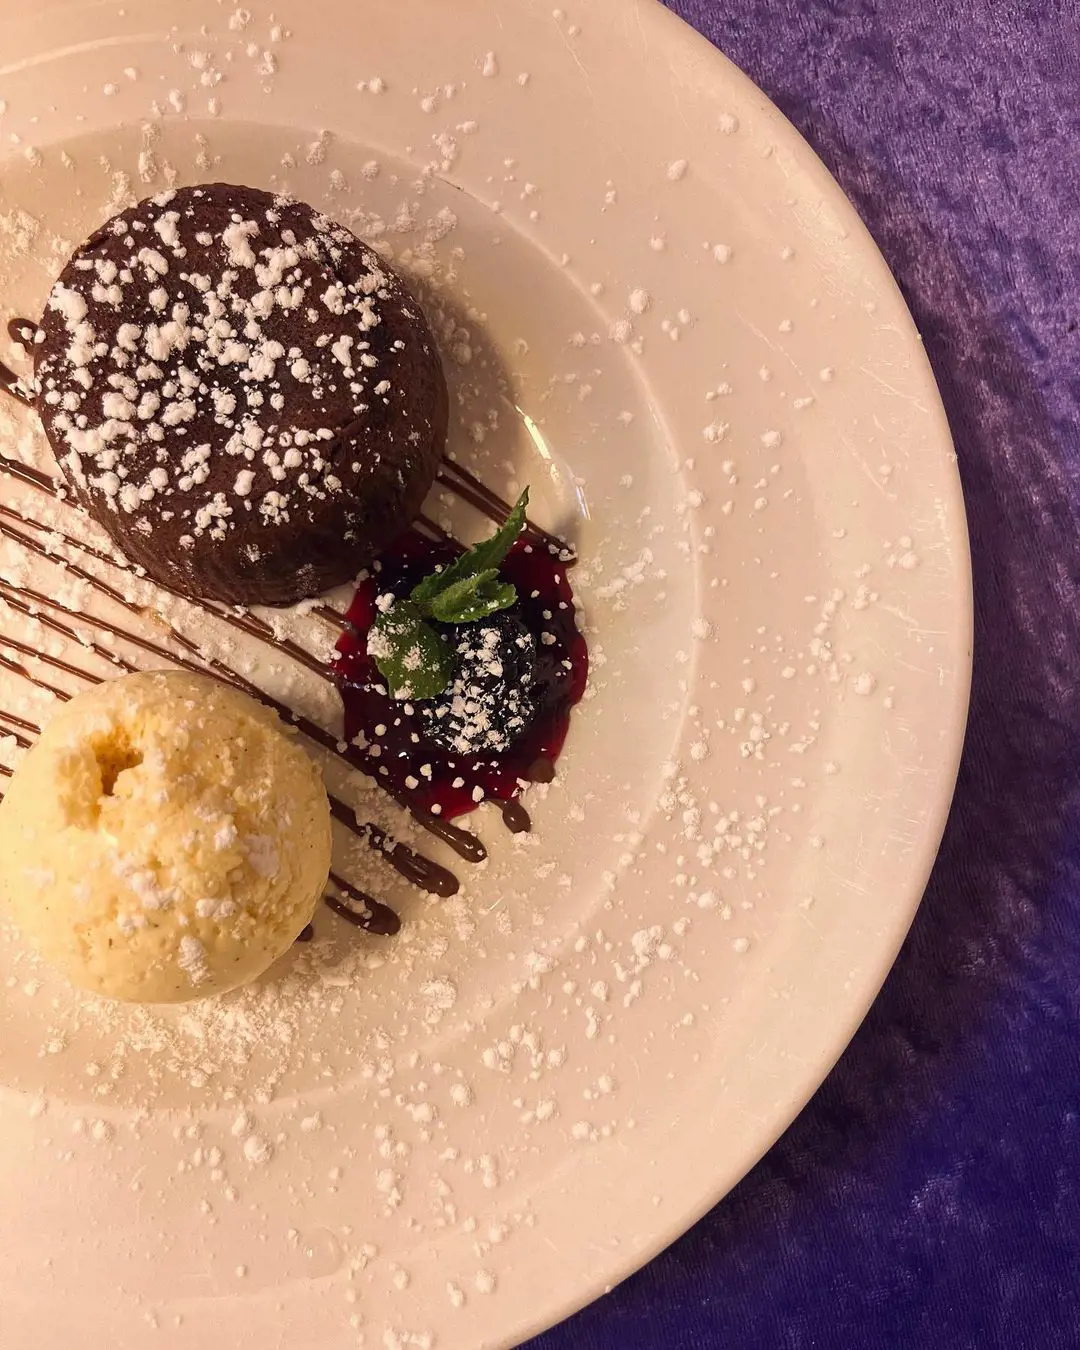 Chocolate Fondant with berrycompote and vanilla ice cream